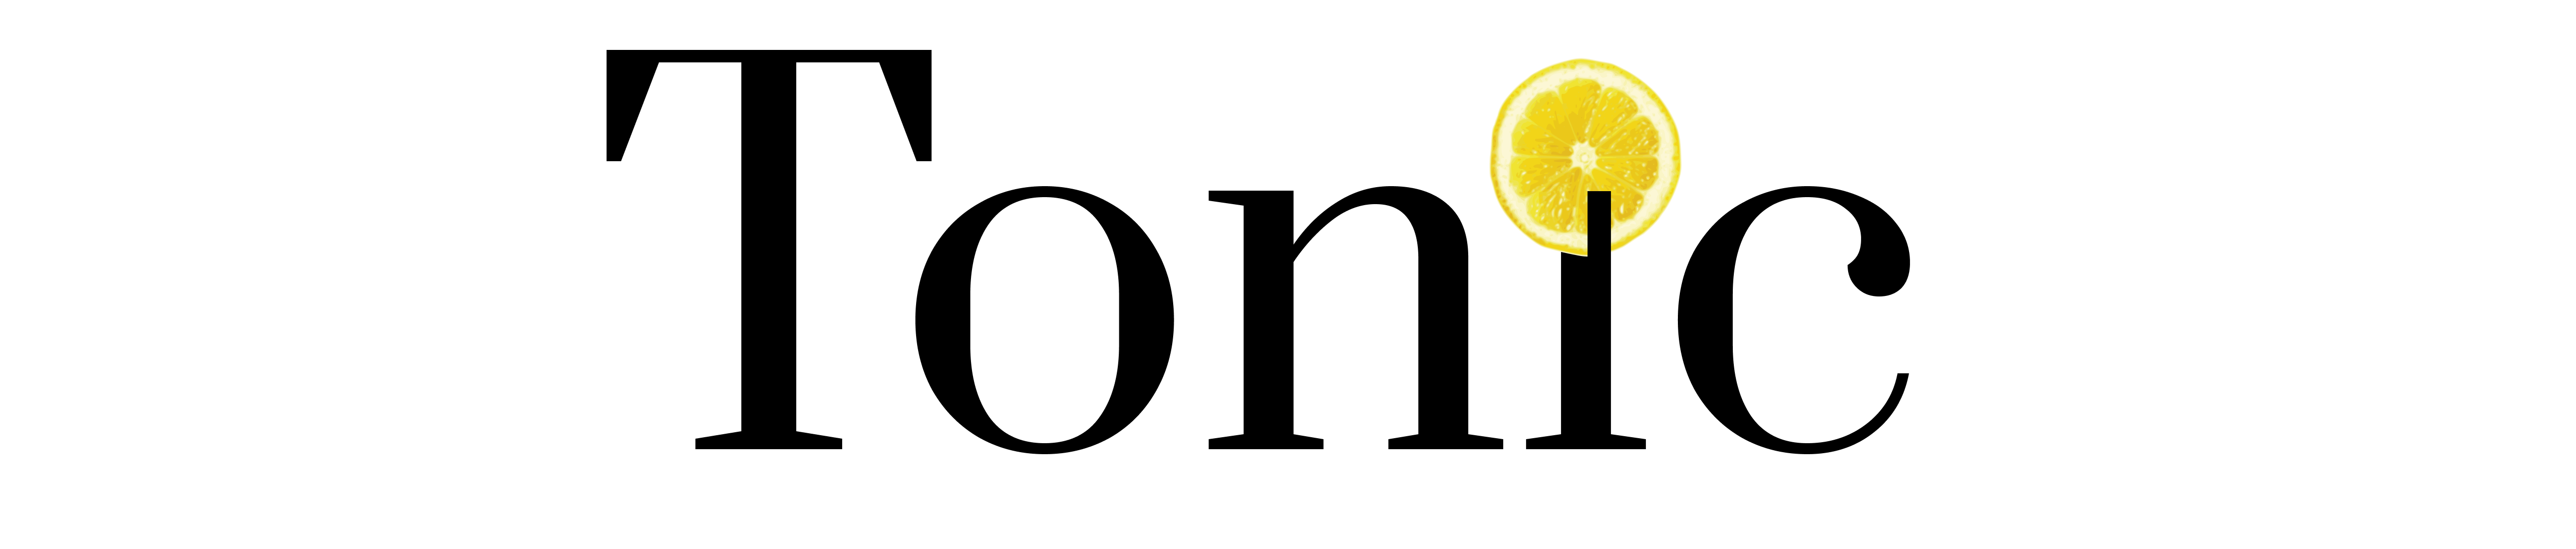 tonic-logo-padded.png